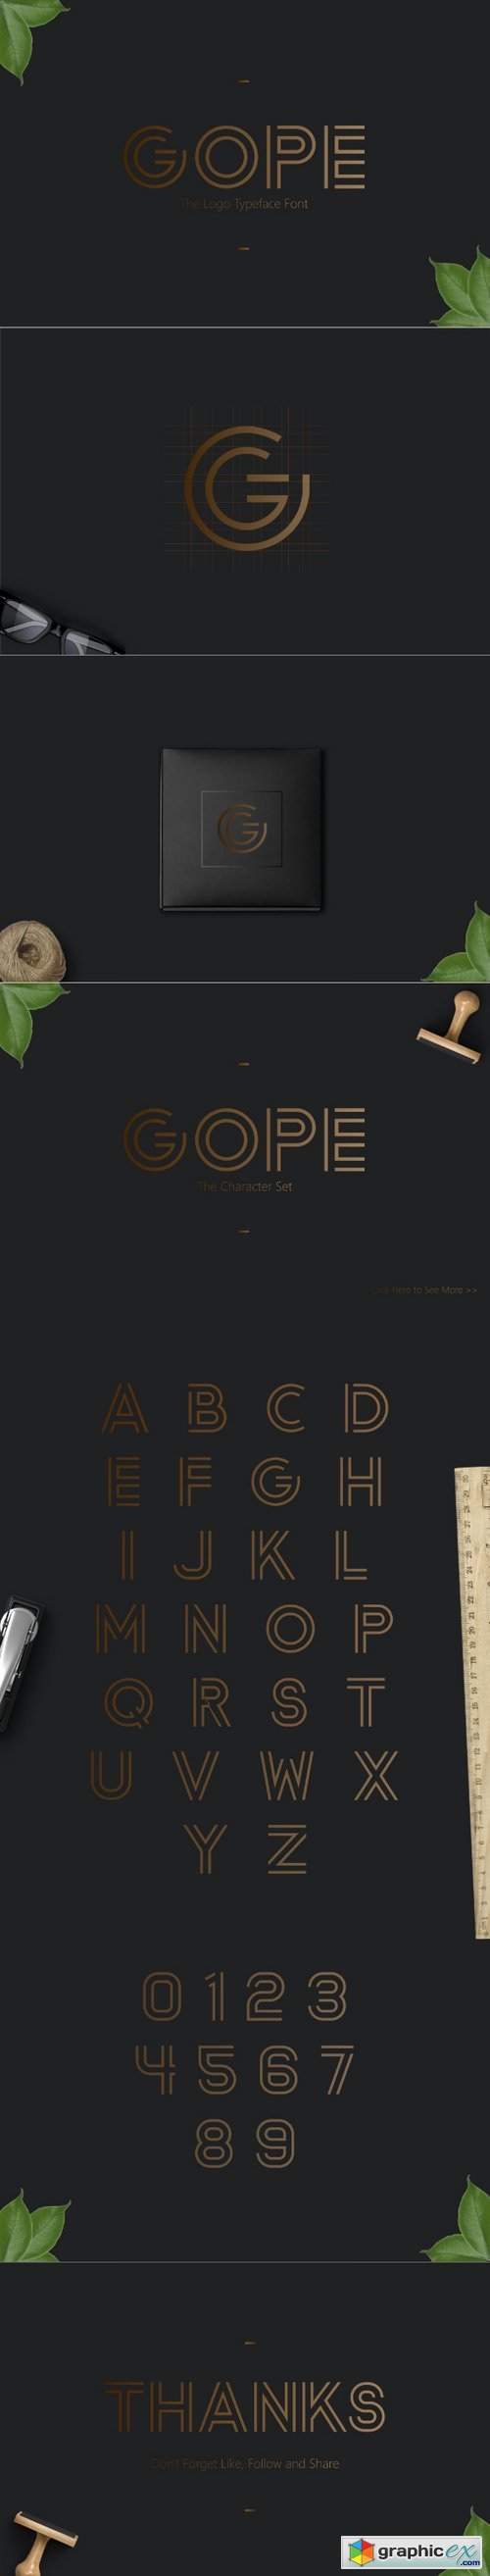 Gope Typeface